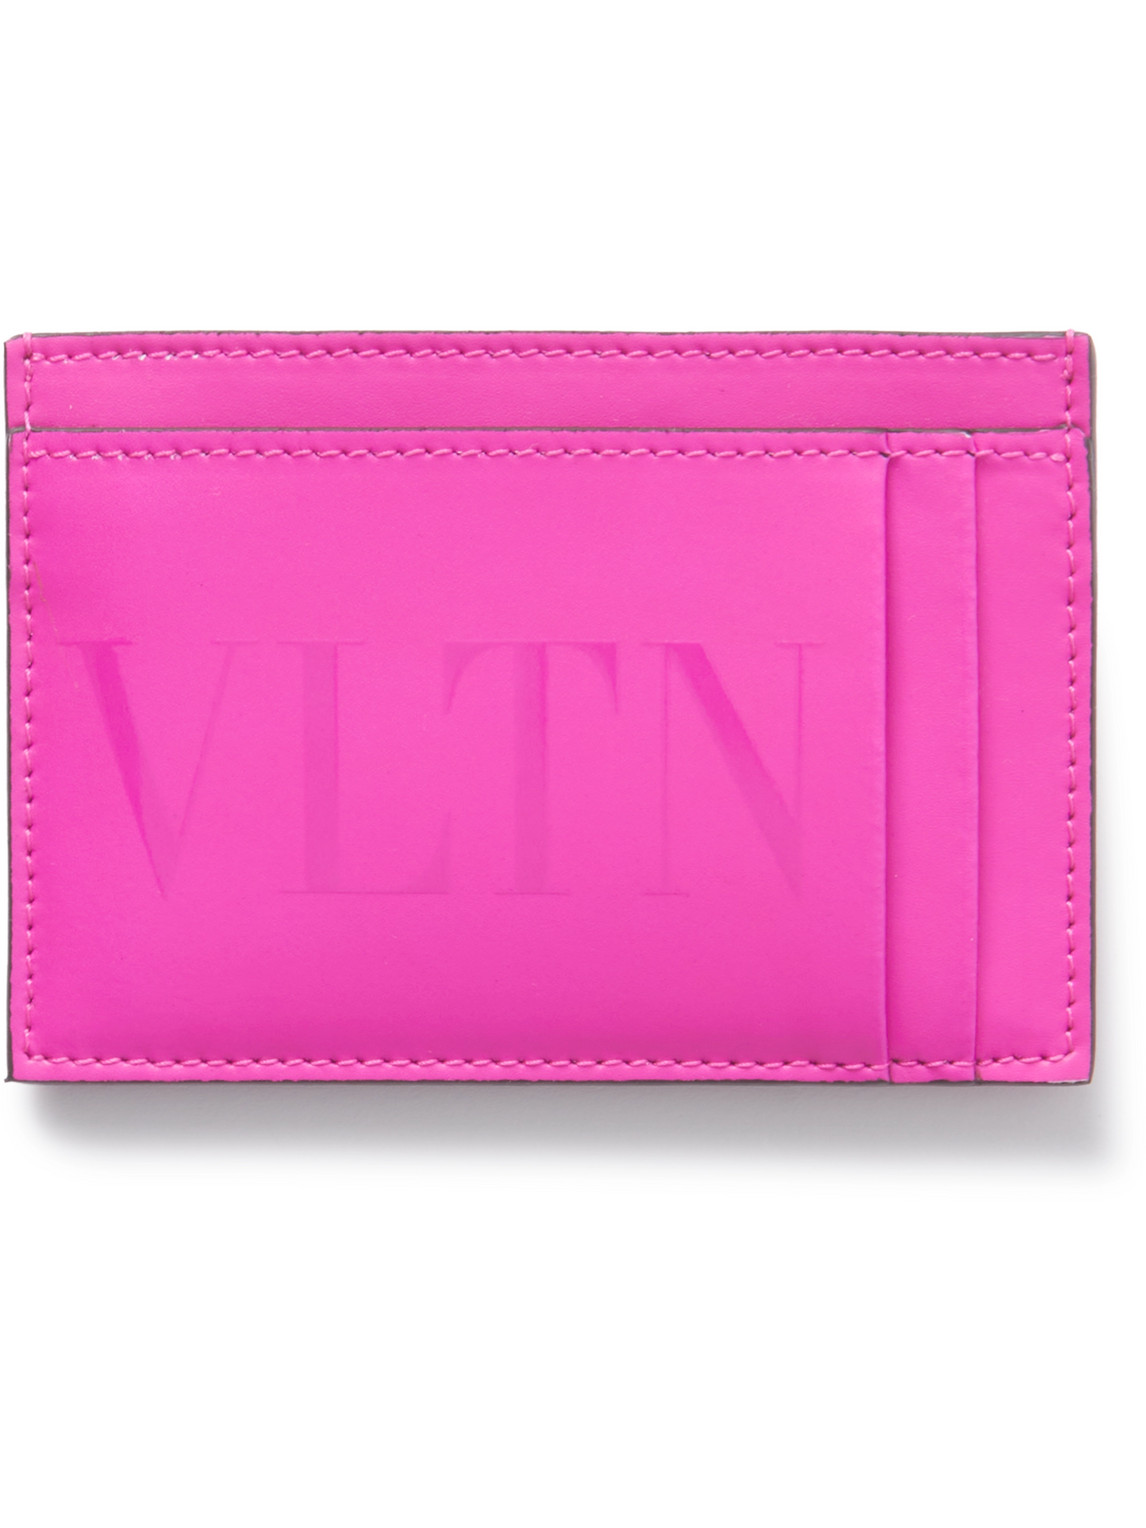 Valentino - Valentino Garavani Logo-Print Leather Cardholder - Men - Pink